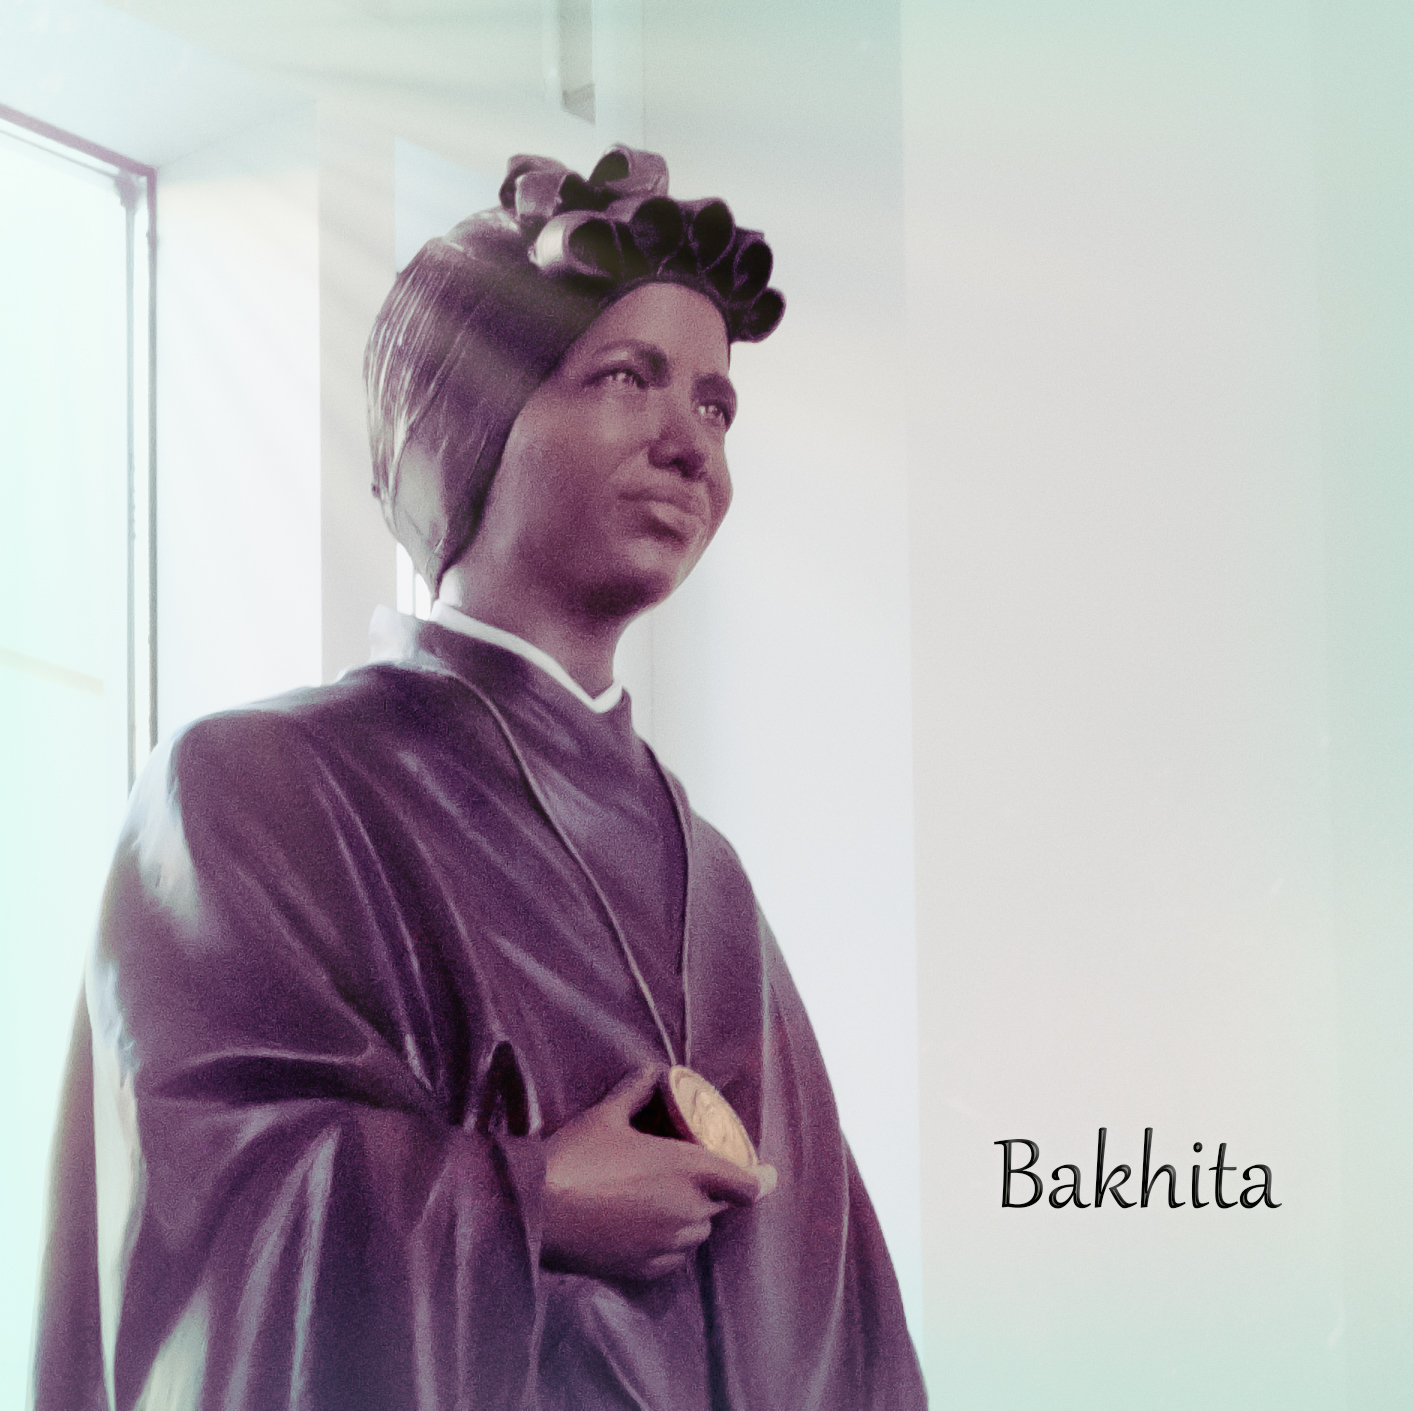 Statue of St. Josephine Bakhita